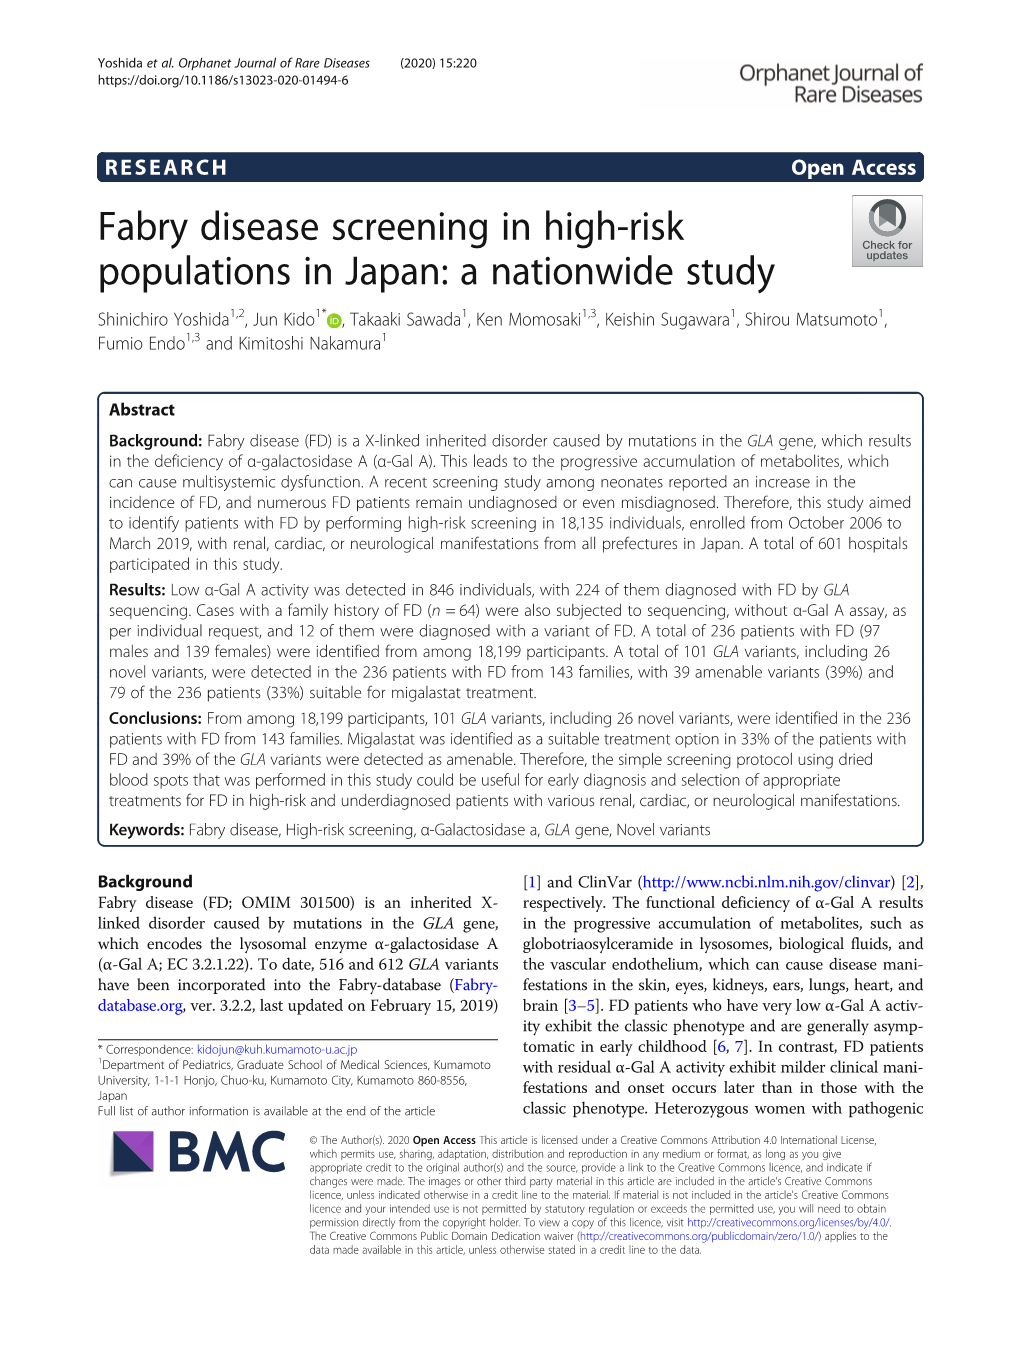 Fabry Disease Screening in High-Risk Populations in Japan